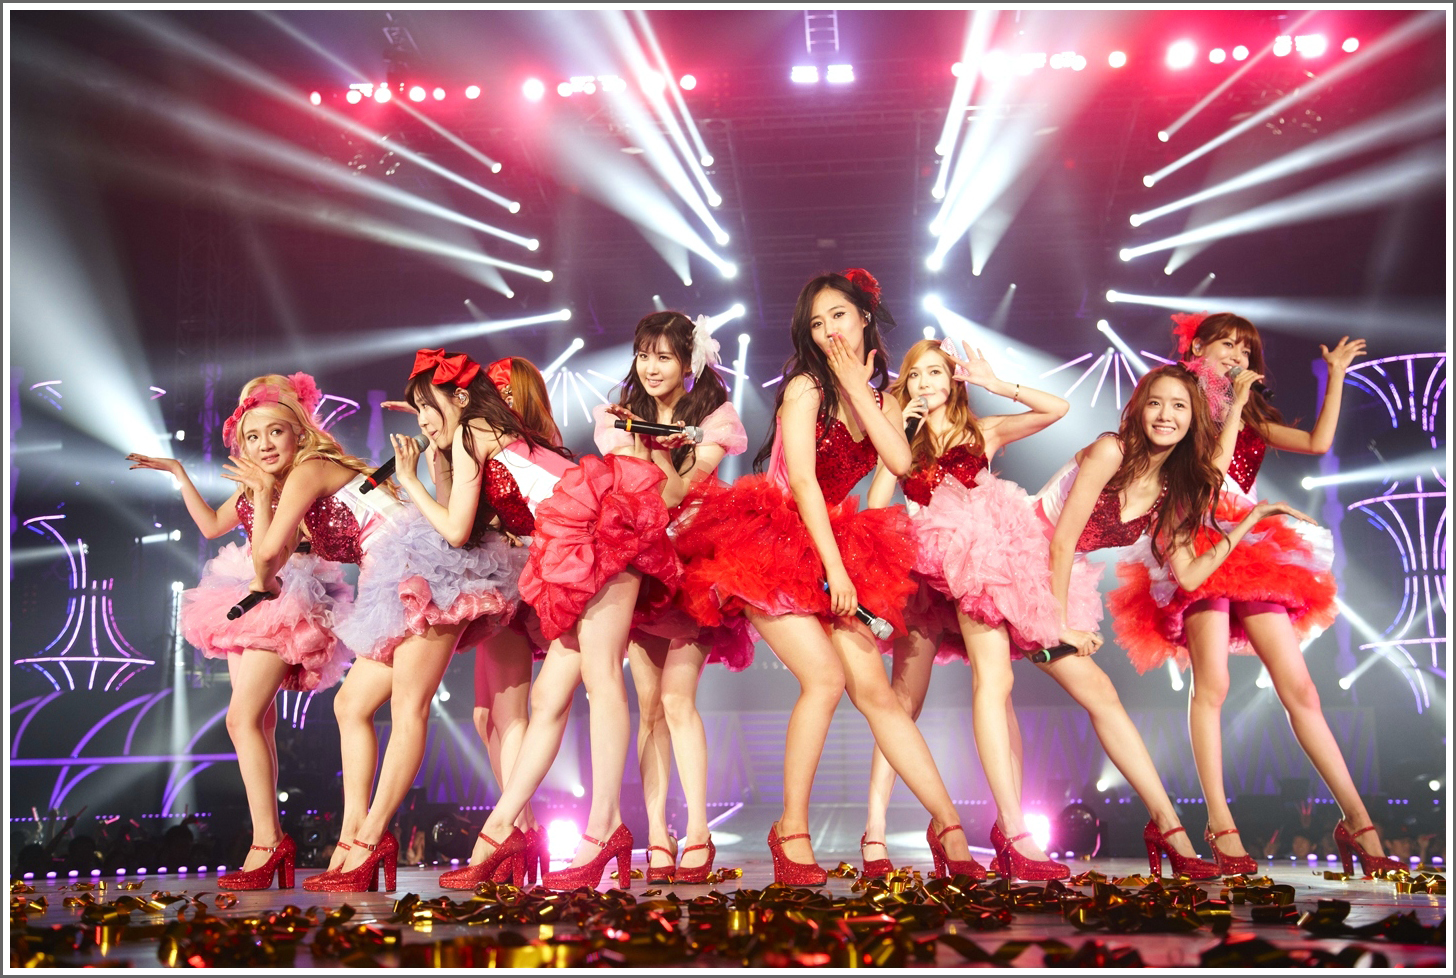 [photo taken by me] 2013 Girls Generation World Tour In Seoul